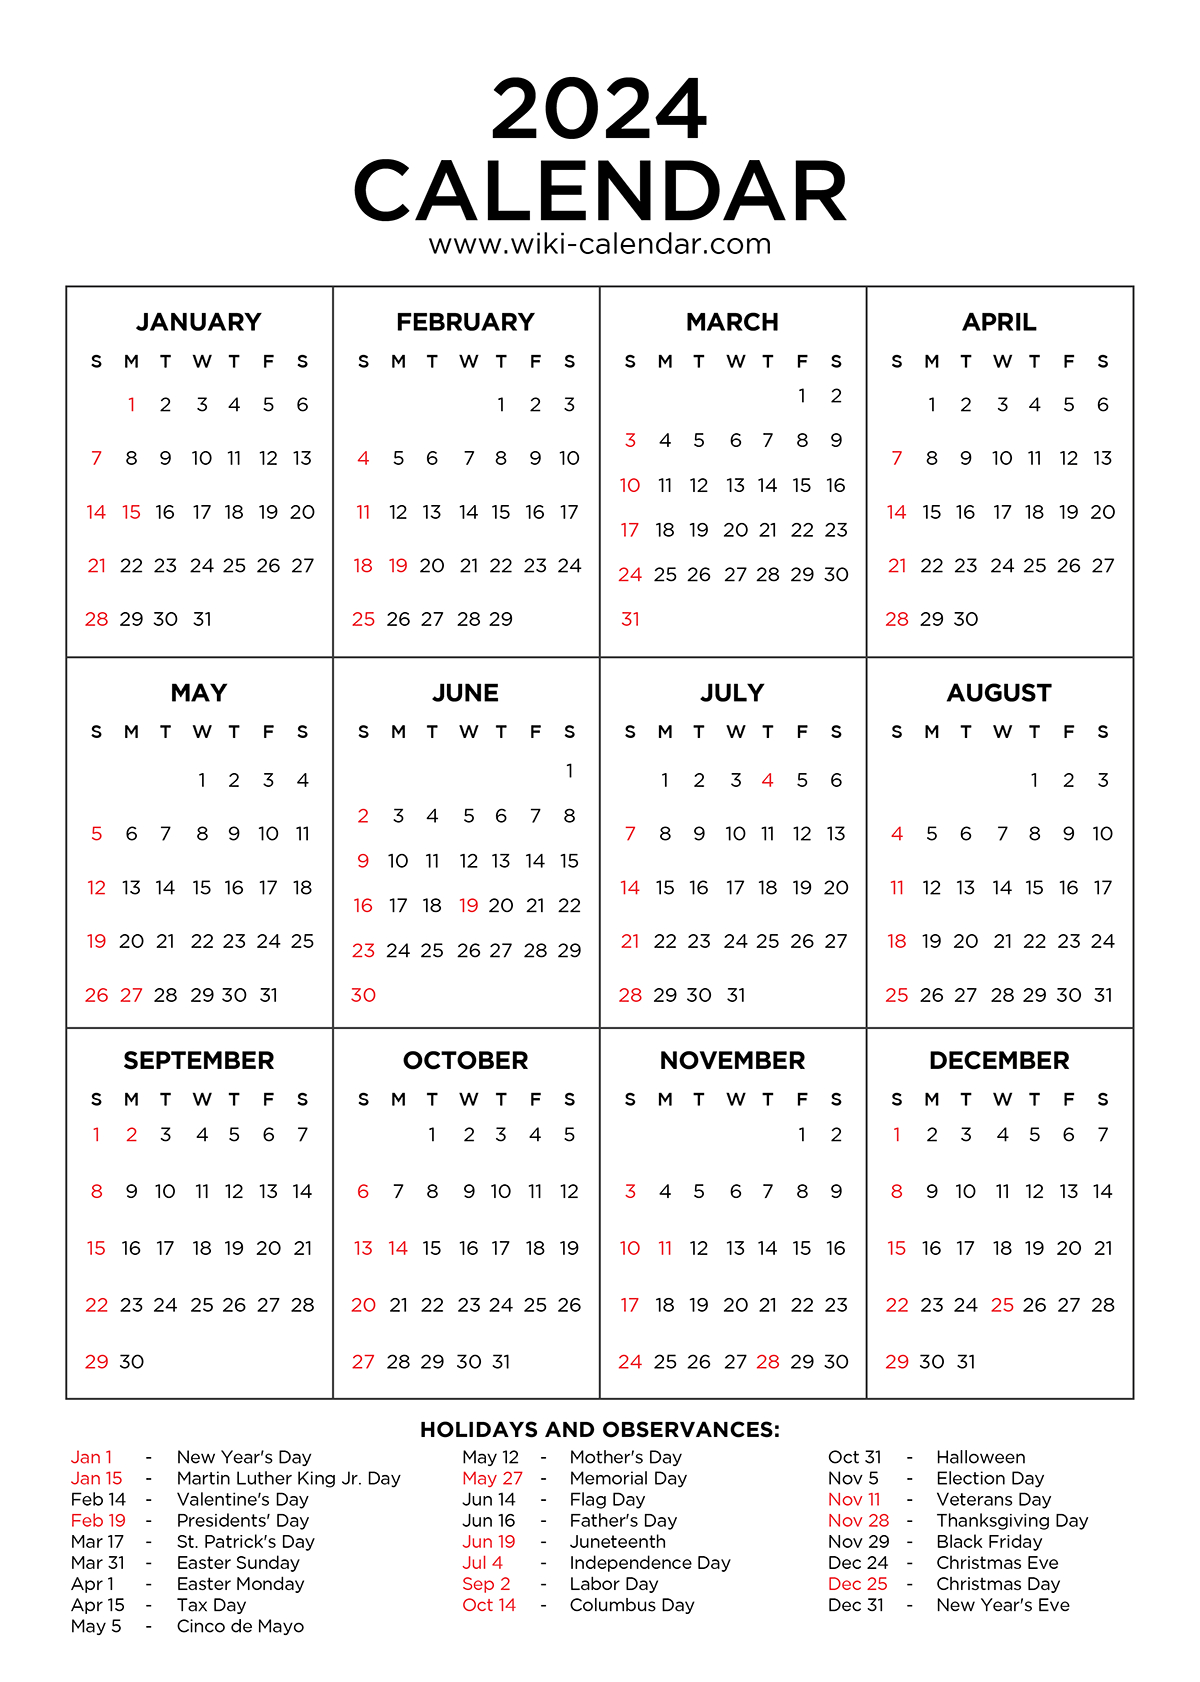 Year 2024 Calendar Printable With Holidays - Wiki Calendar | Printable 2024 Monthly Calendar With Holidays